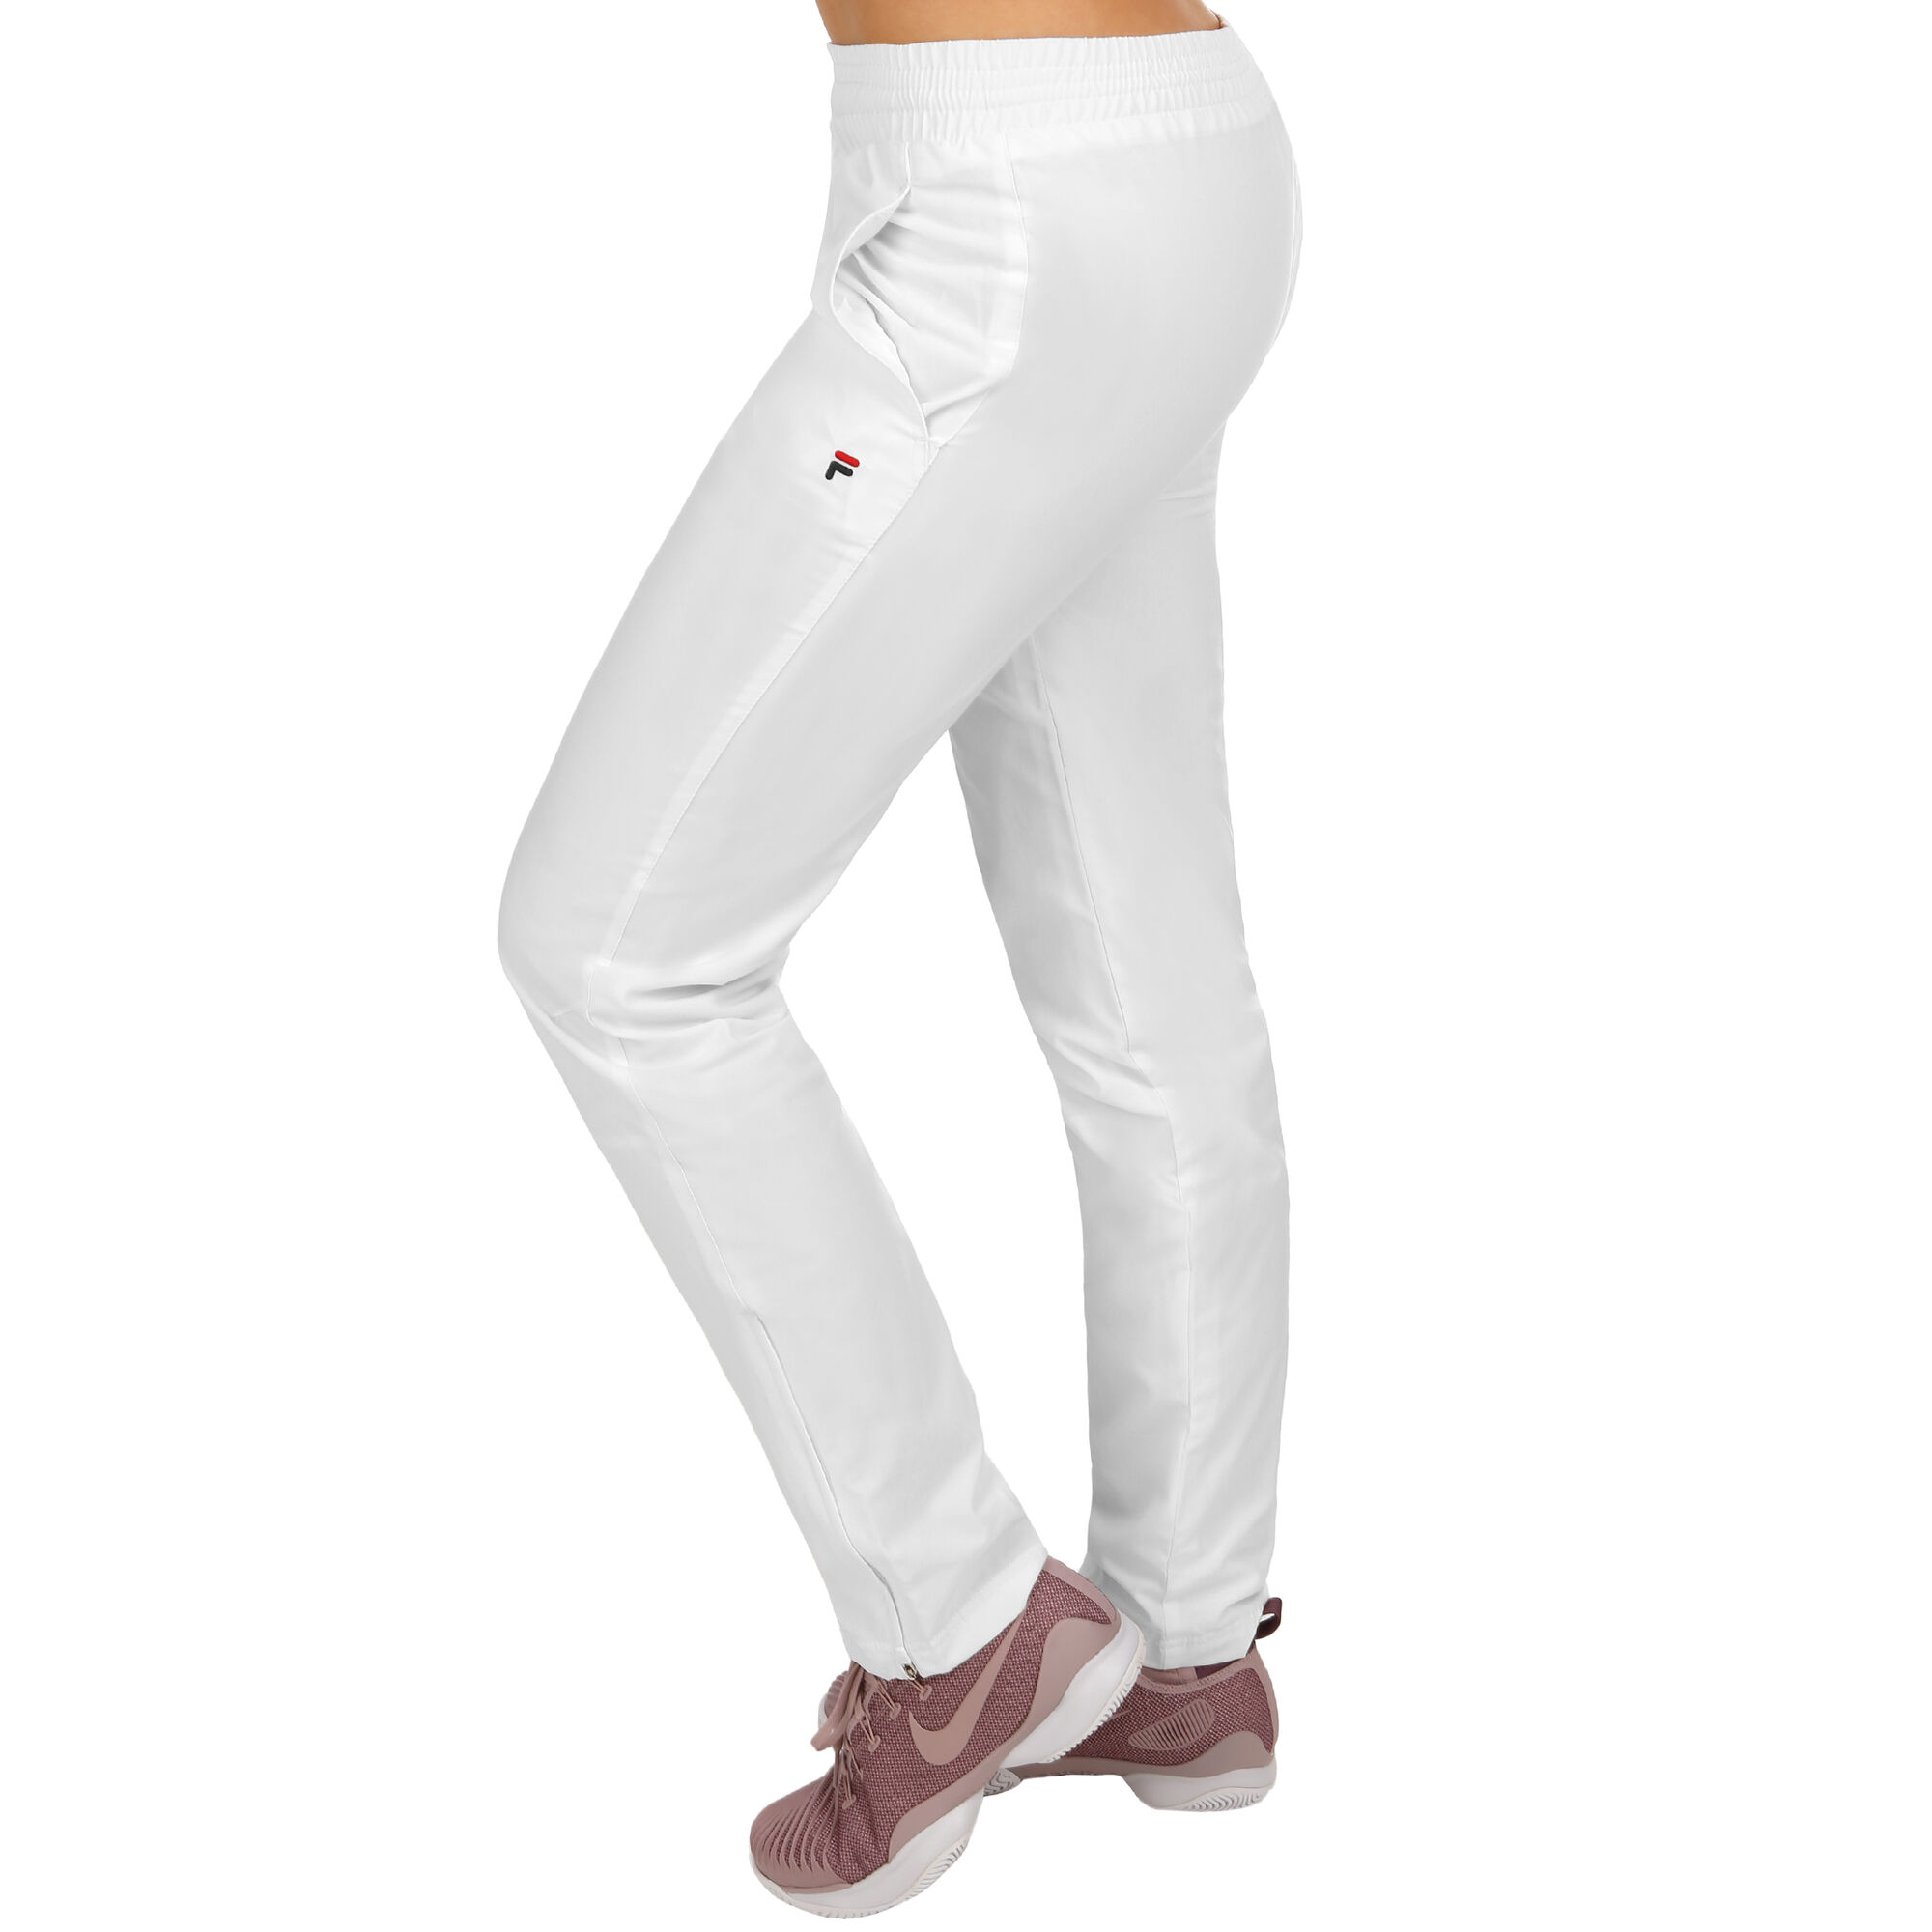 Buy Fila Patty Training Pants Women White, Red online